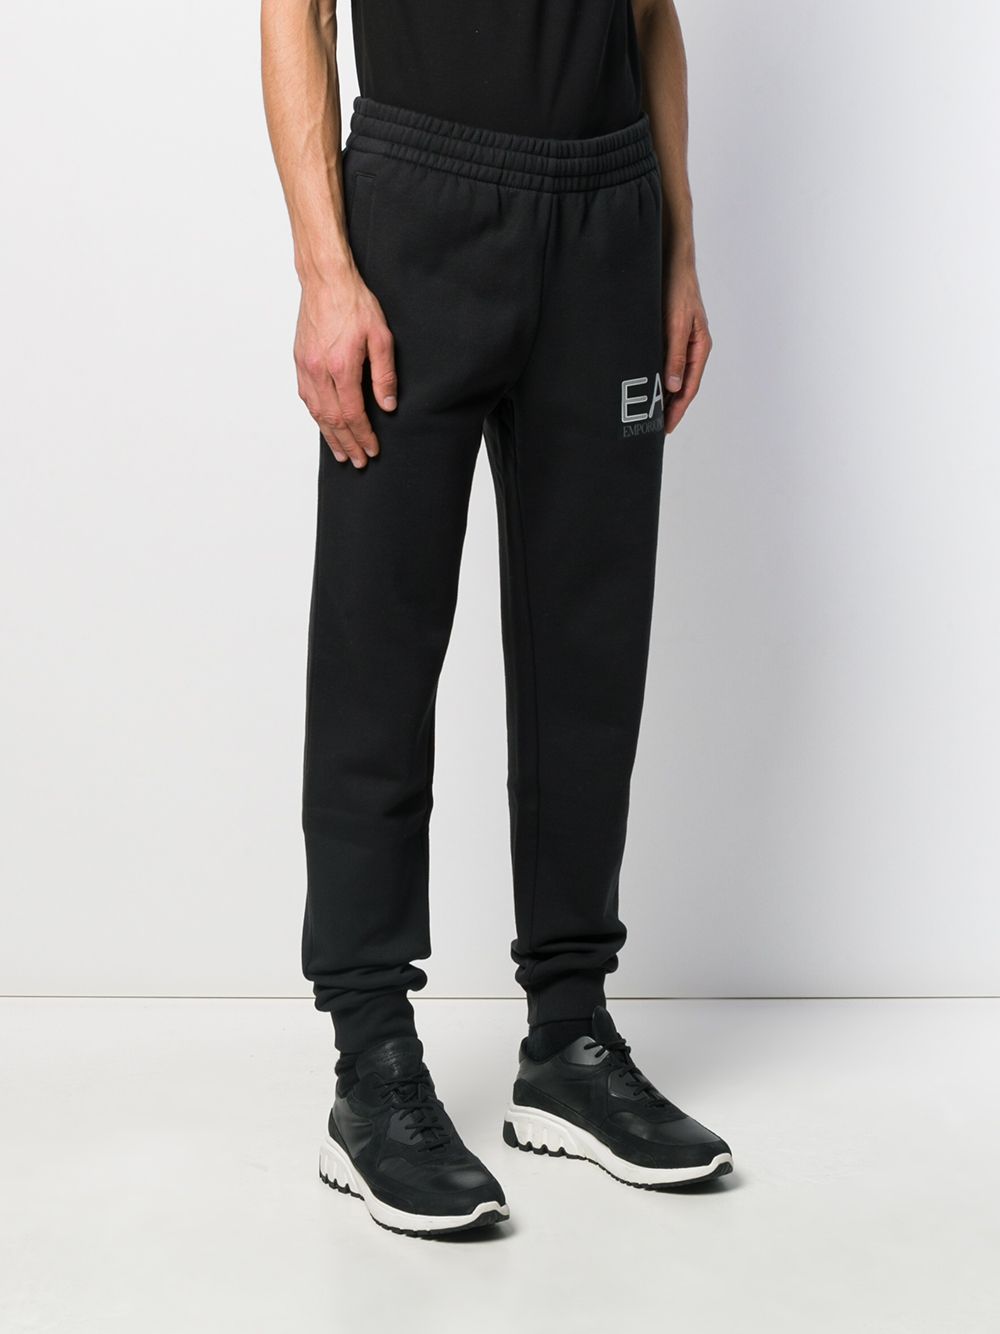 фото Ea7 Emporio Armani спортивные брюки кроя слим с логотипом